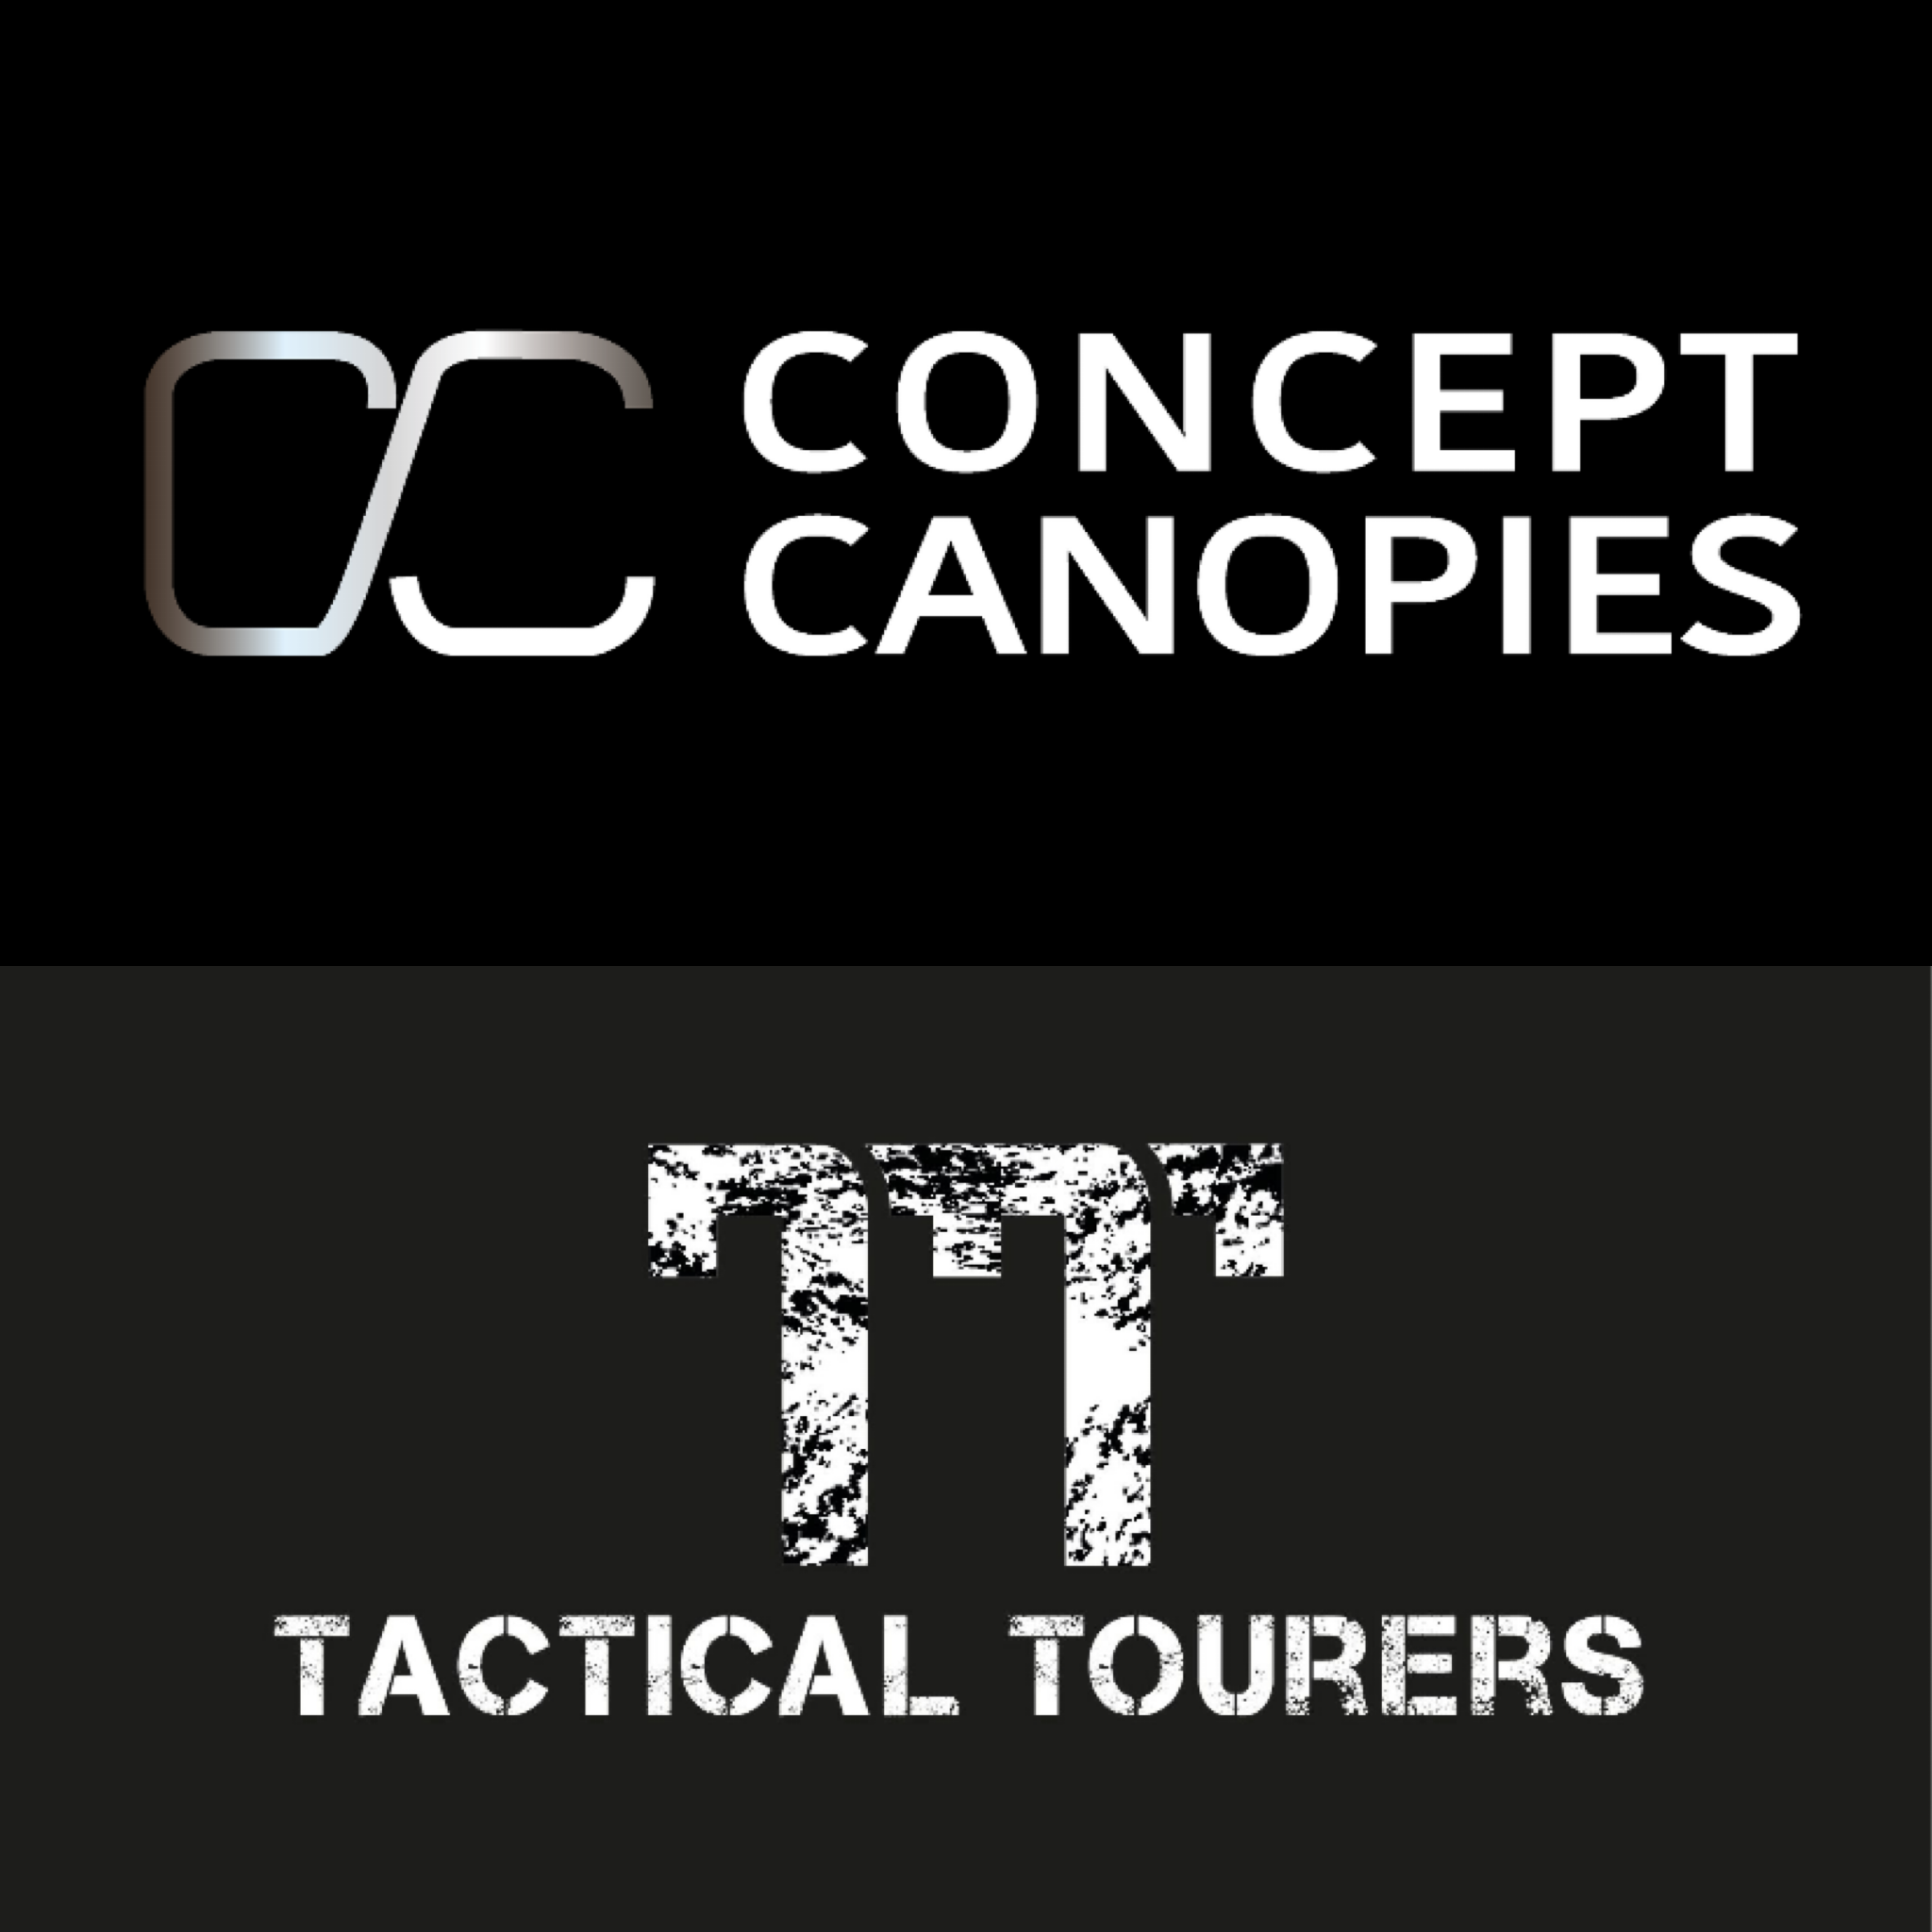 Tactical Tourers & Concept Canopies